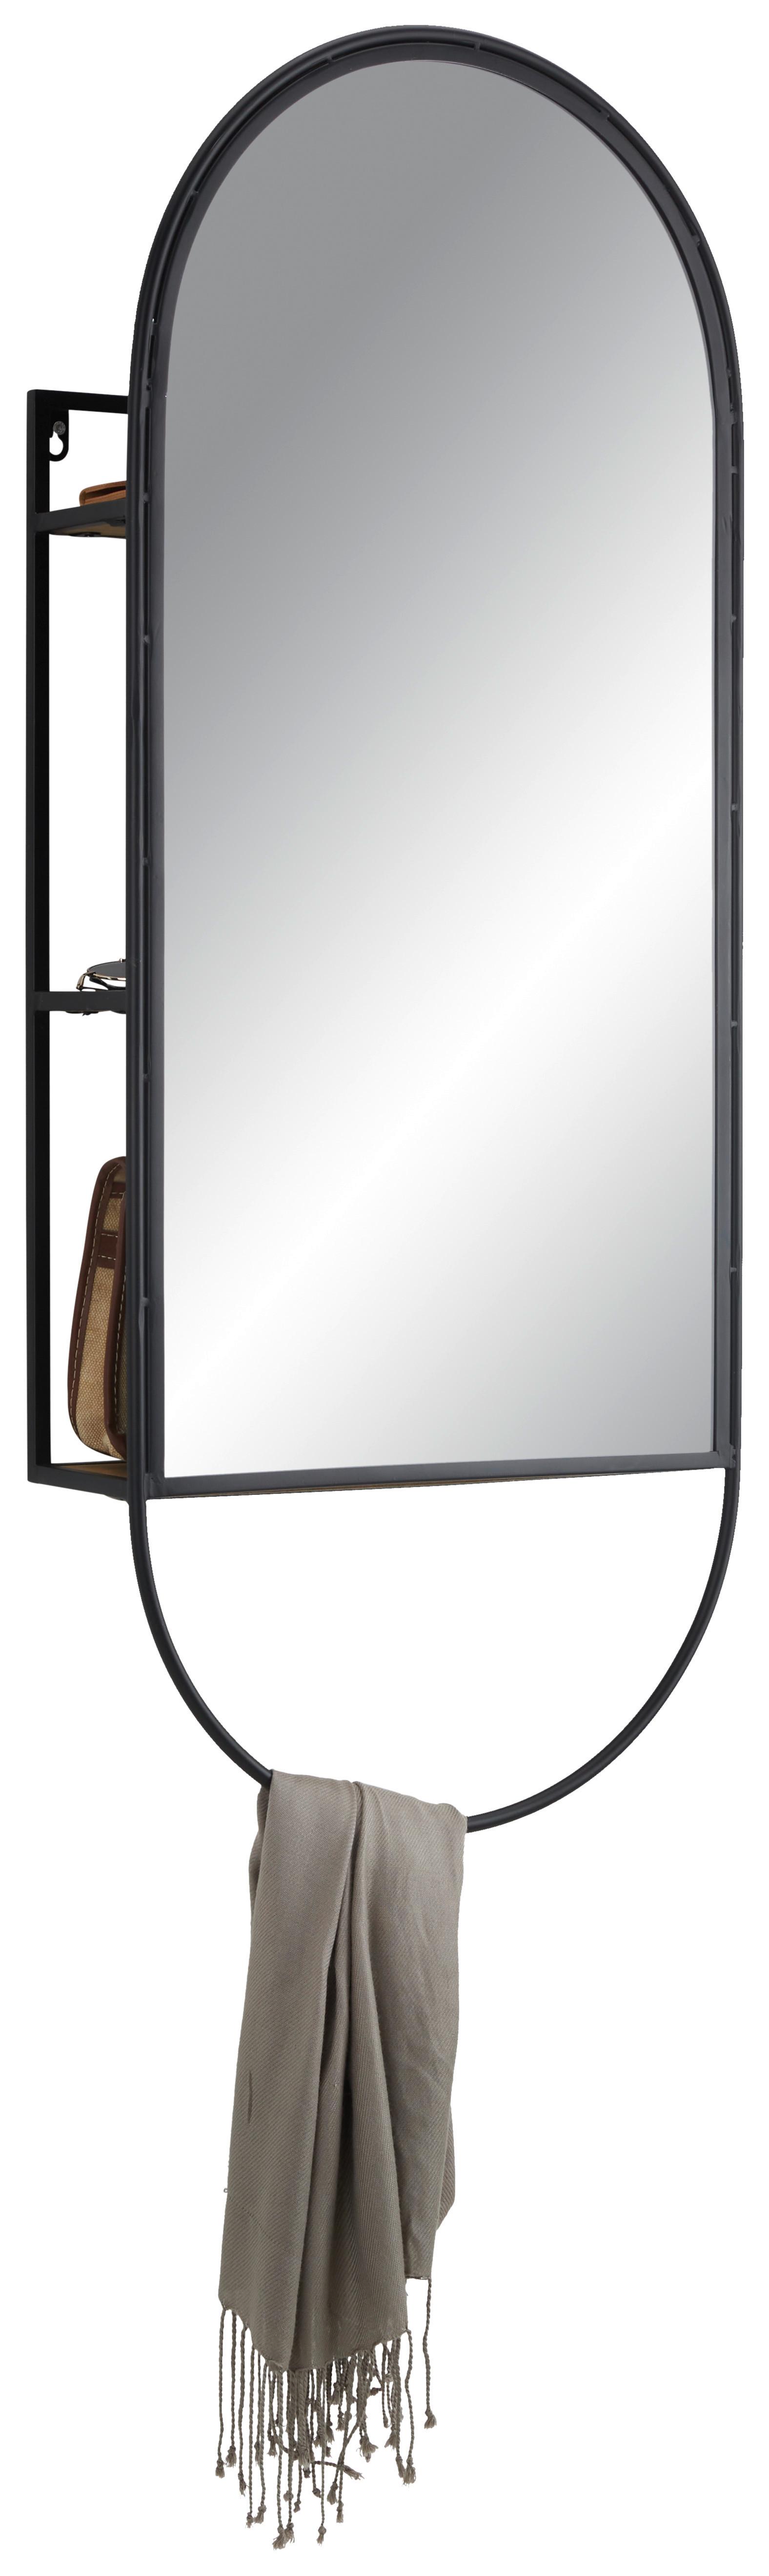 Ogledalo Mira -Trend- - crna, Lifestyle, staklo/drvni materijal (40/100/12cm) - Premium Living